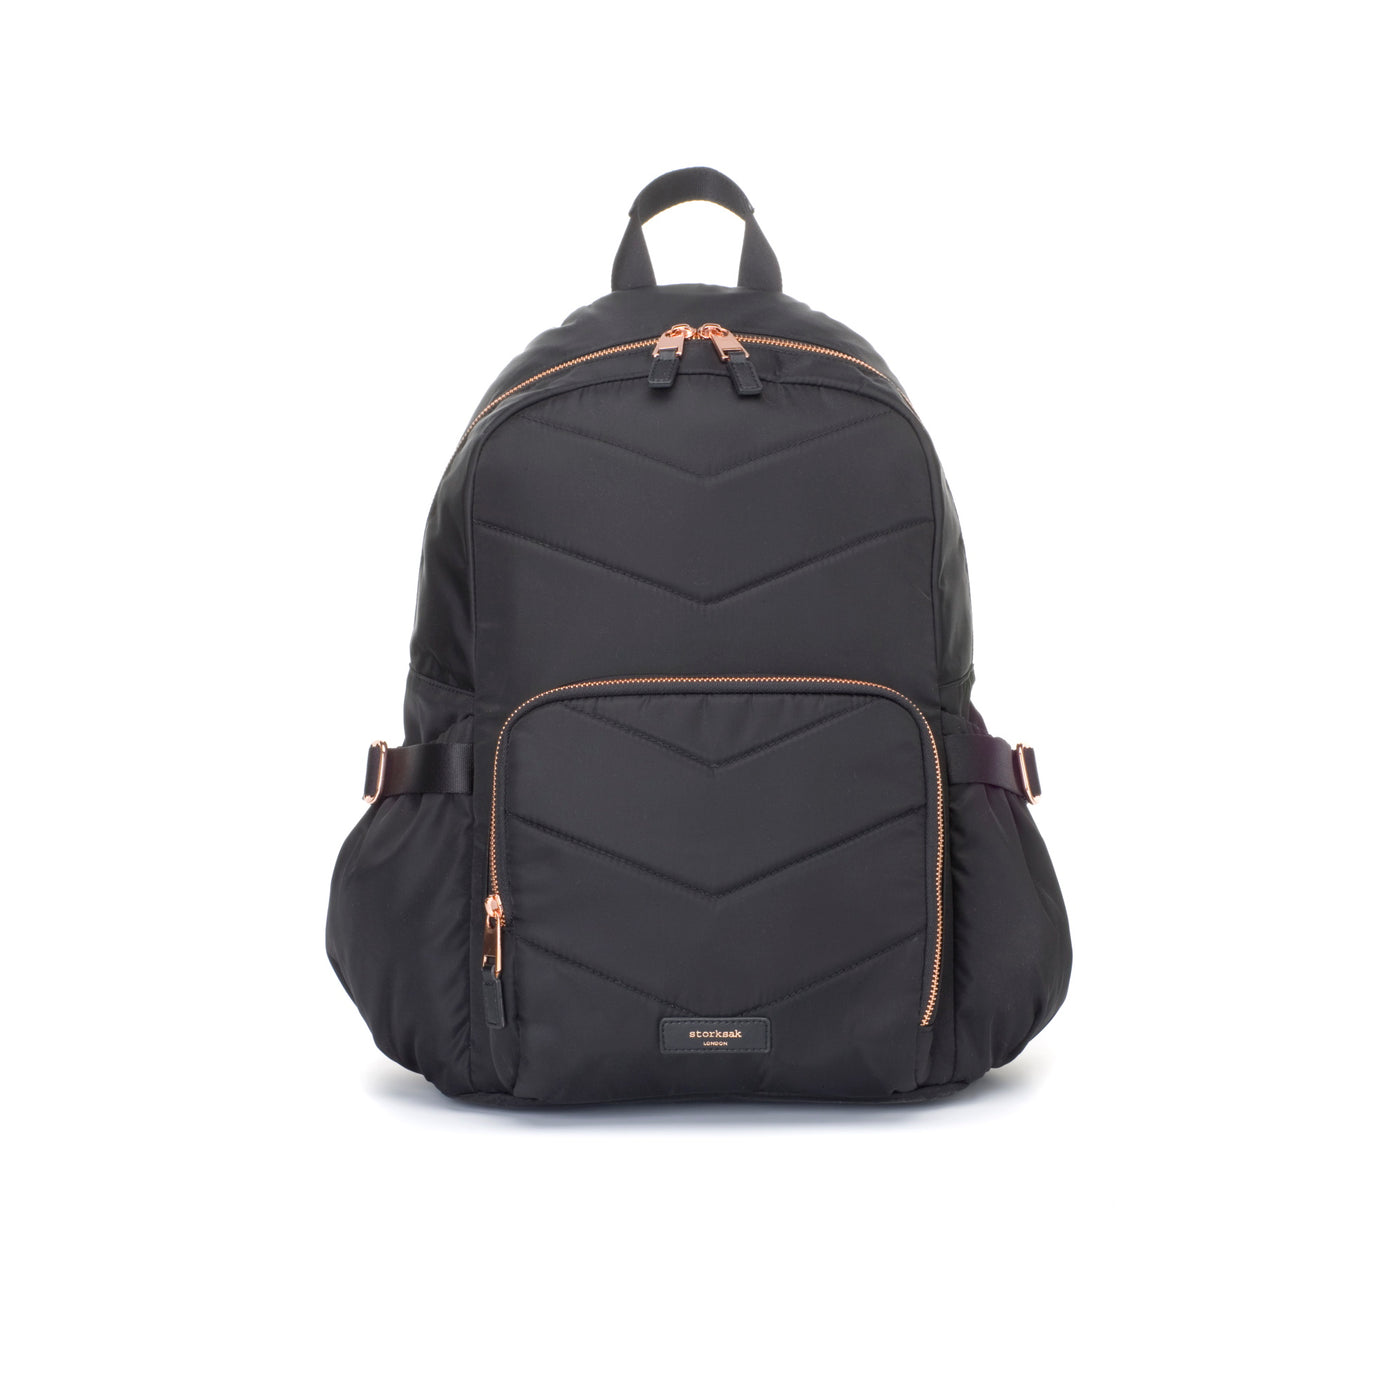 Hero Backpack Nappy Bag - Quilt Black